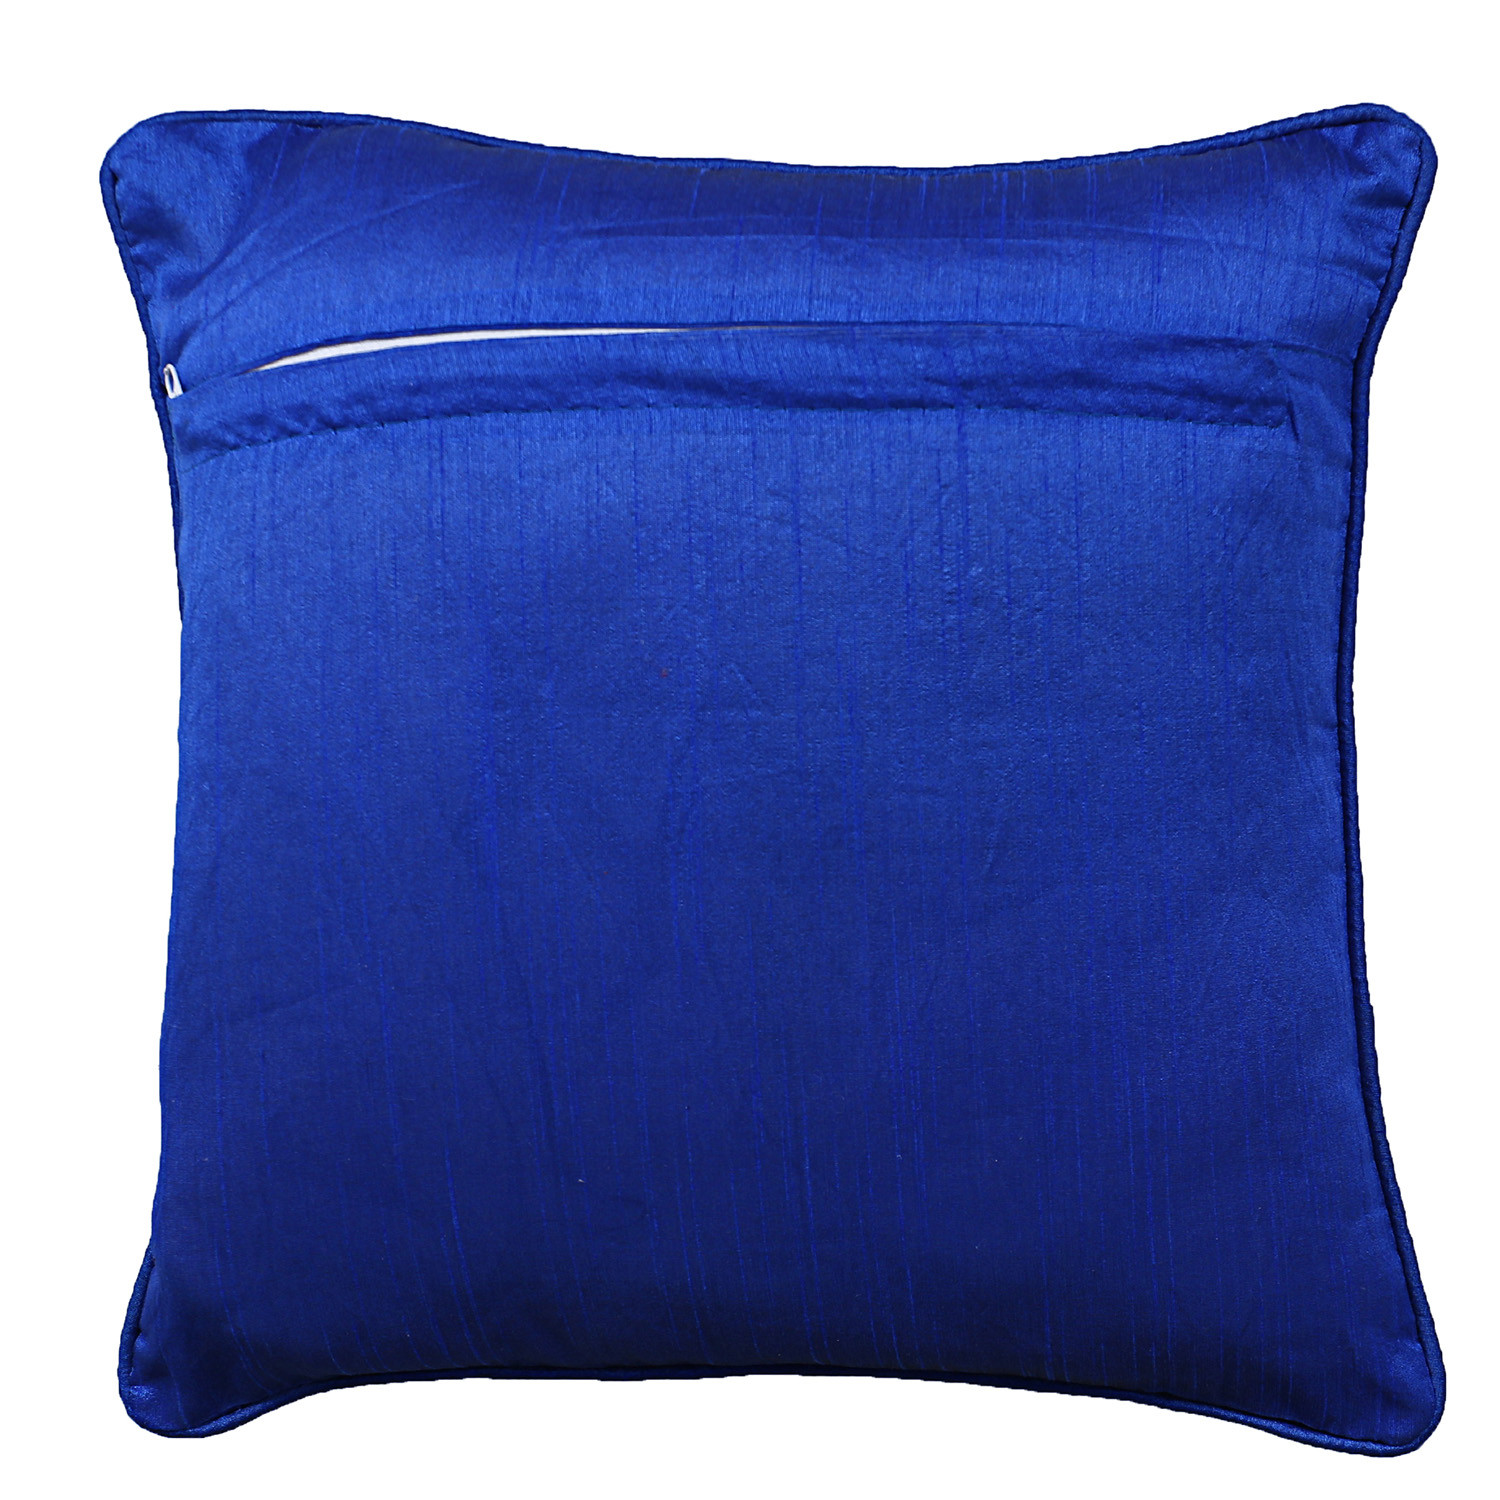 Kuber Industries Embossed Strips Print Cushion Cover|Ractangle Cushion Covers|Sofa Cushion Covers|Cushion Covers 16 inch x 16 inch|Cushion Cover Set of 5  (Multicolor)